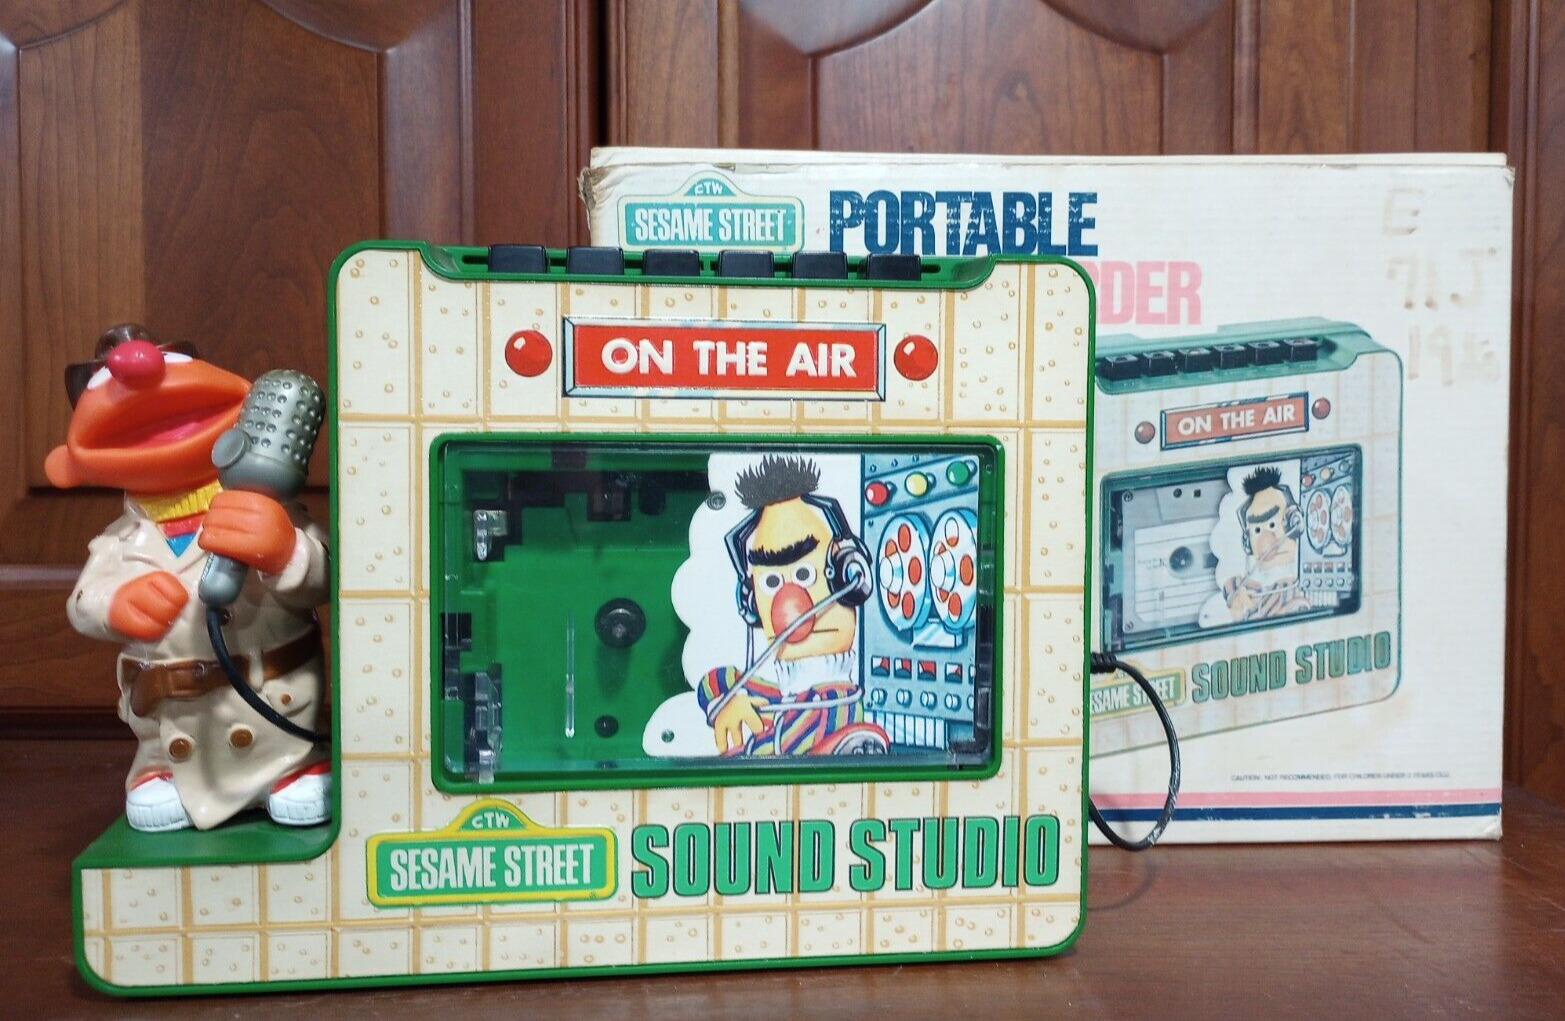 Rare Vintage 1977 Sesame Street Portable Cassette Recorder w/ Mike & Box - Works